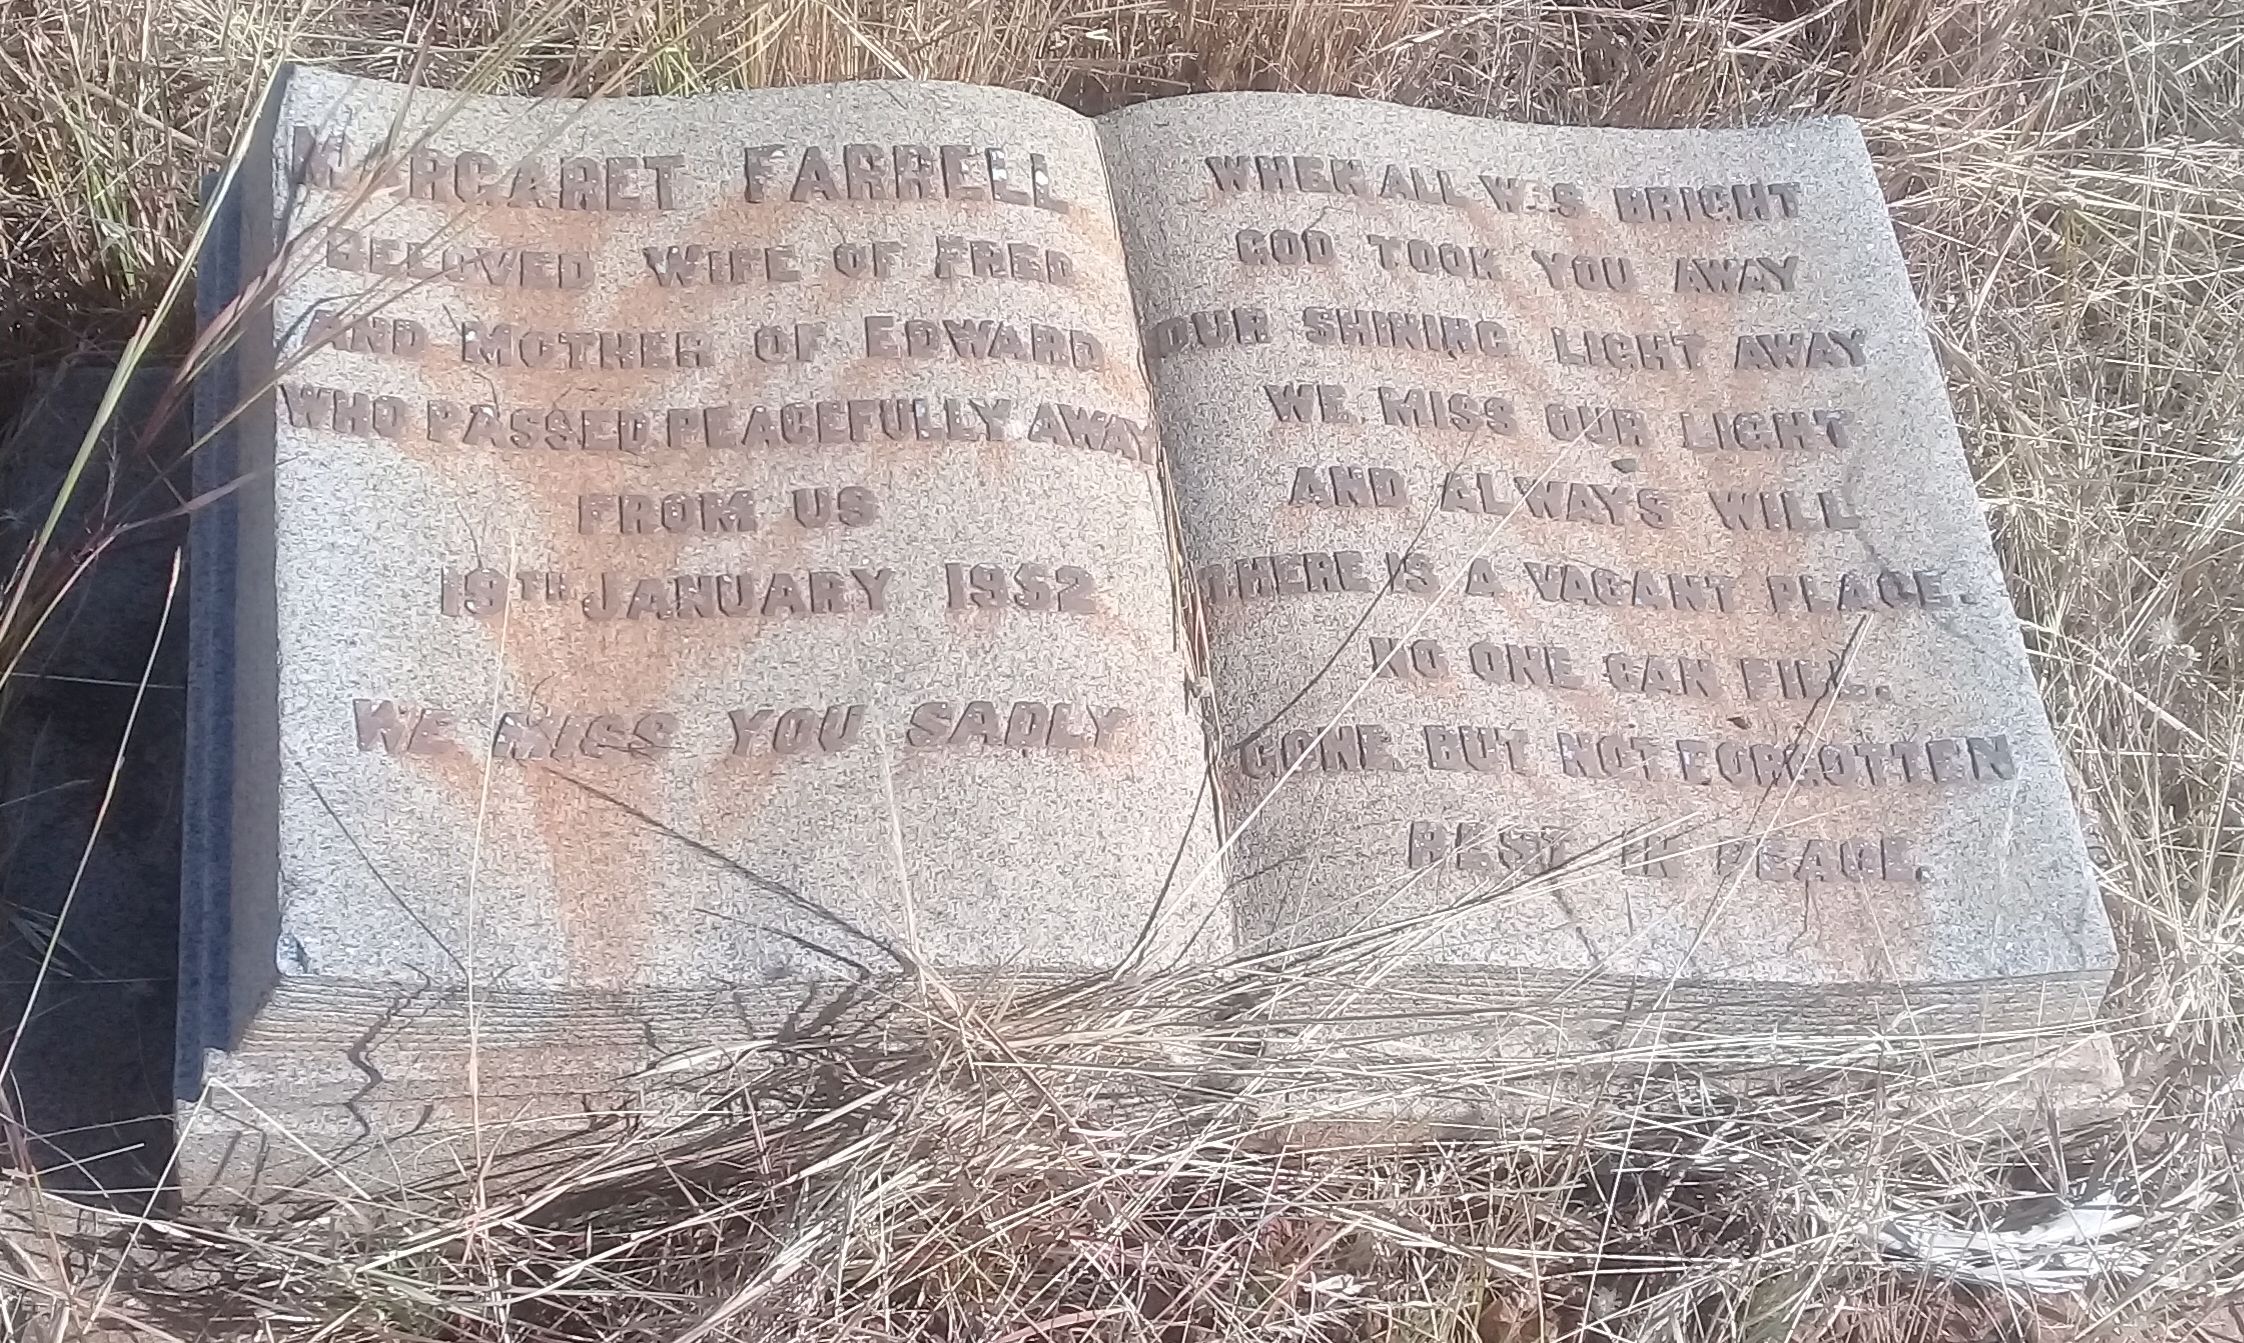 cemeteries_headstone_byo_farrell_1952